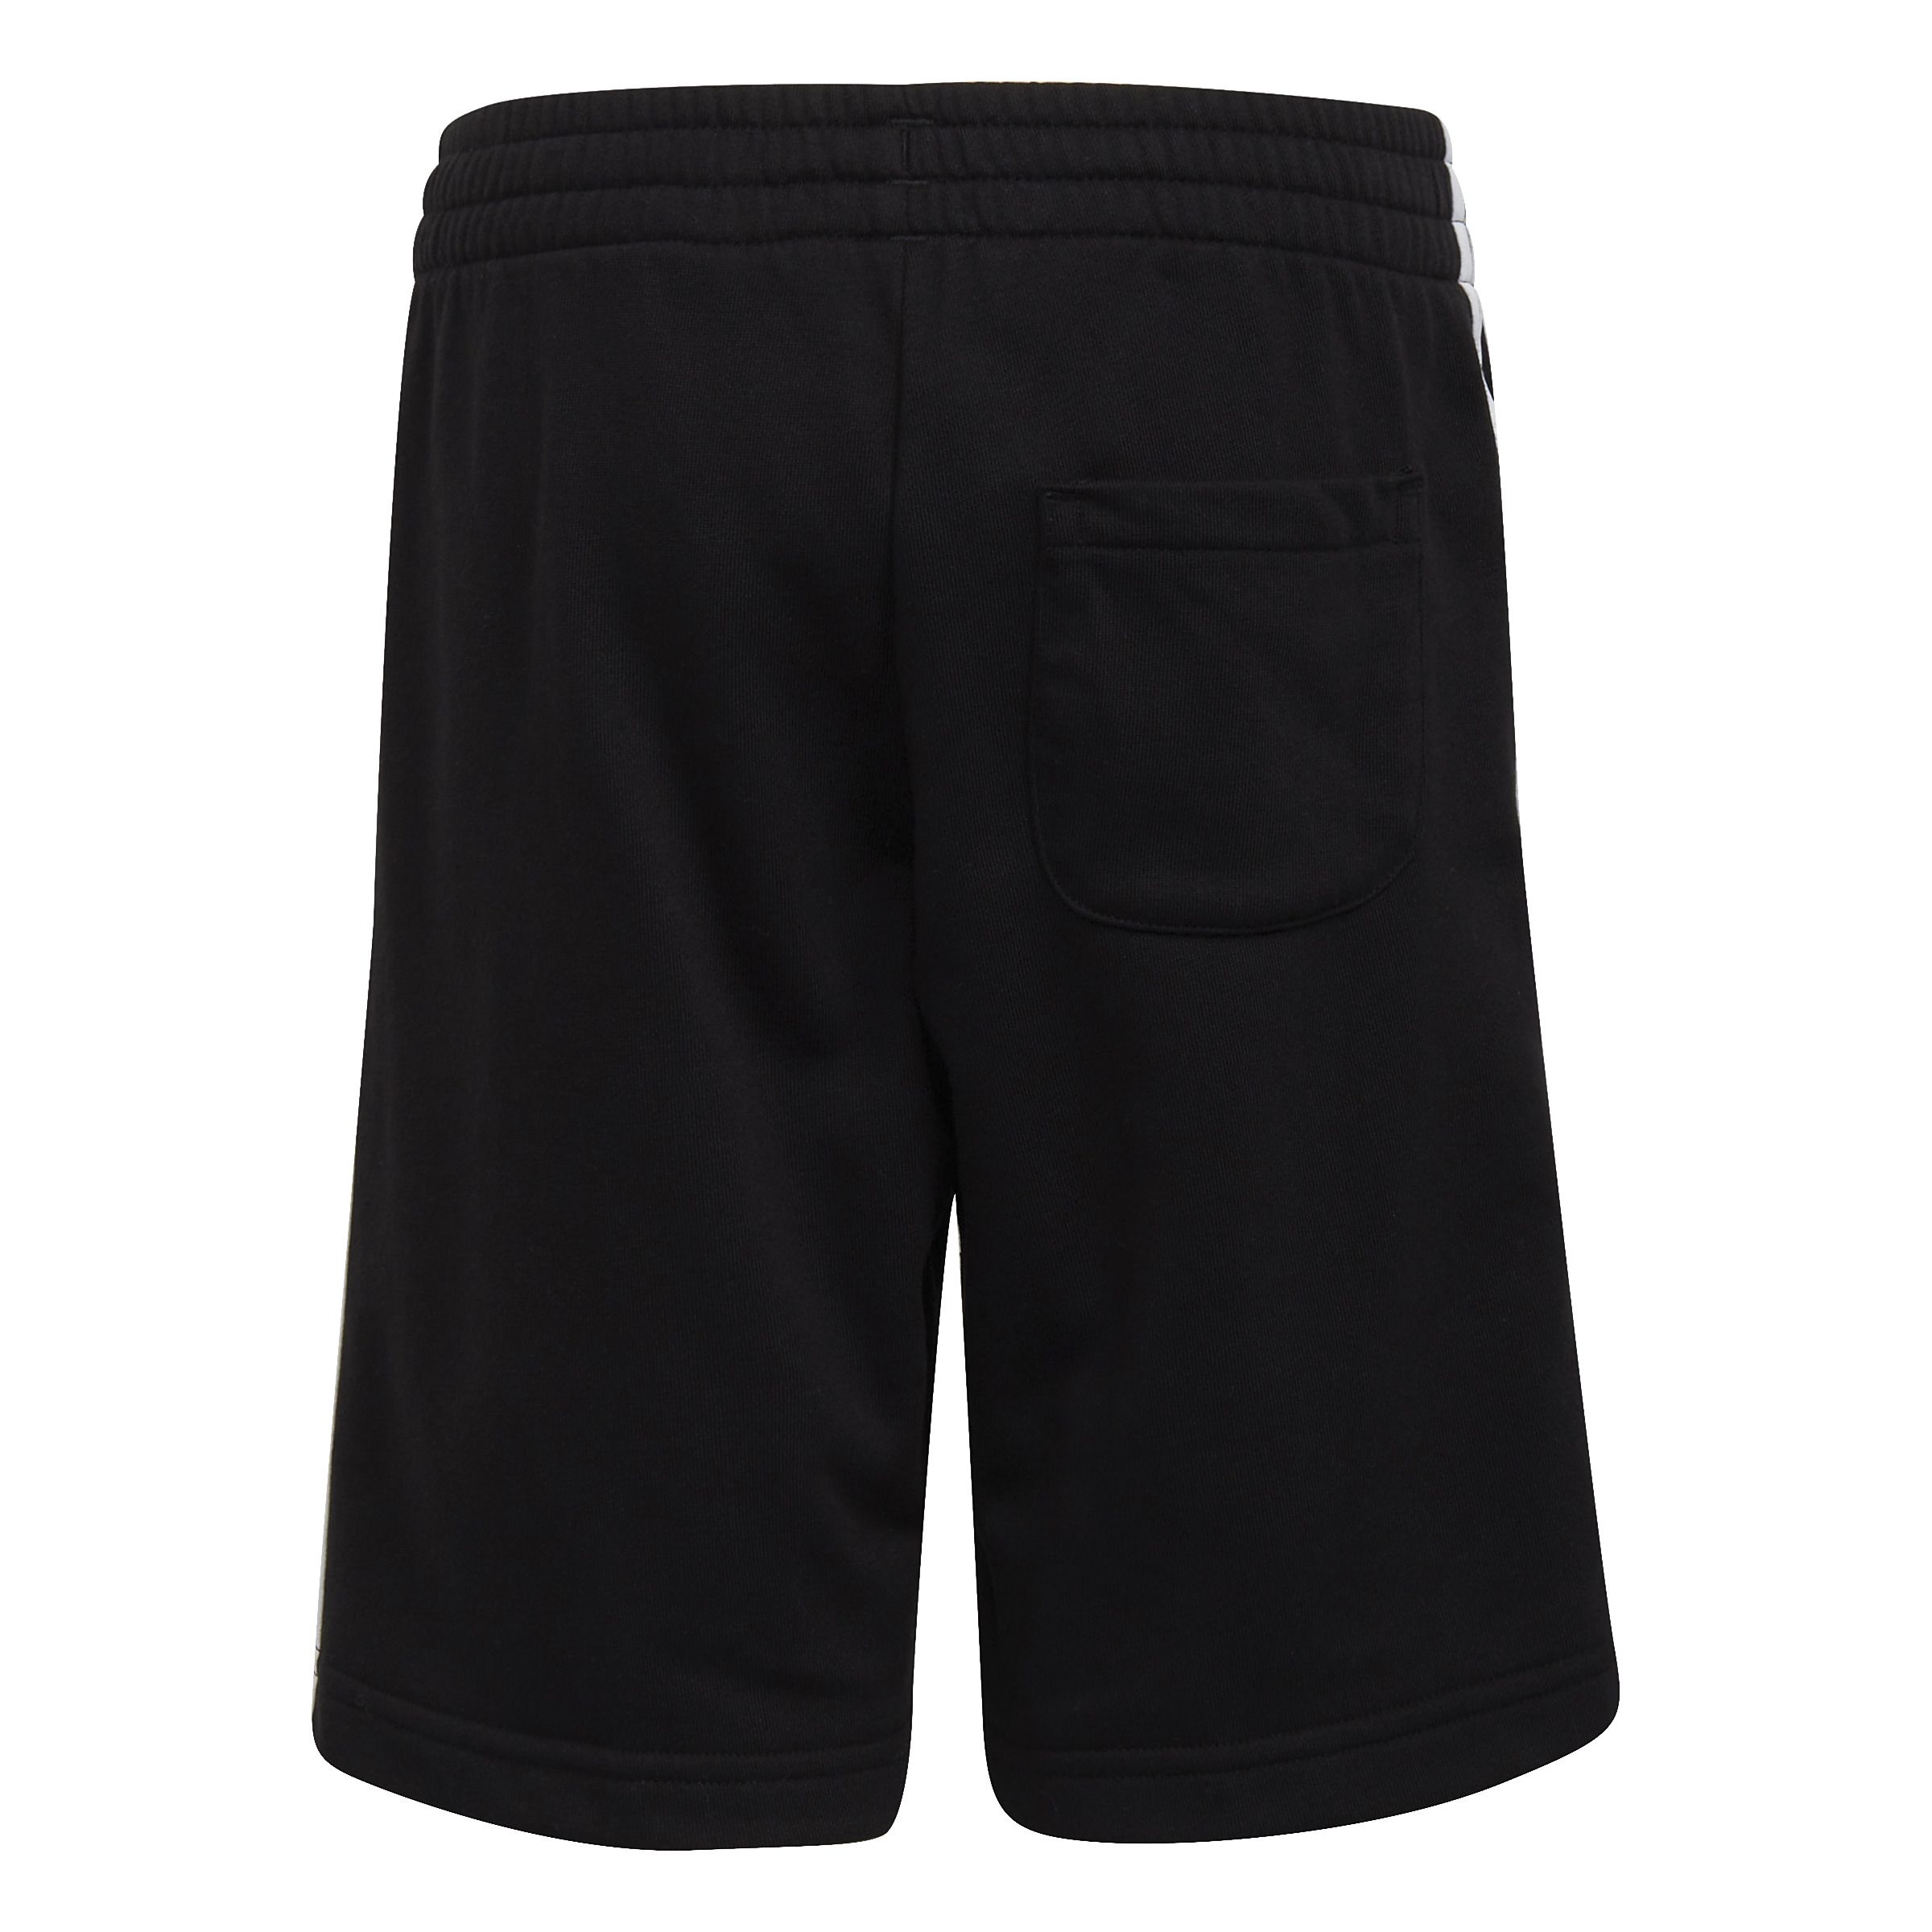 Adidas Lk 3S Short Pantaloneta negro de niño lifestyle Referencia: H65791 -  prochampions